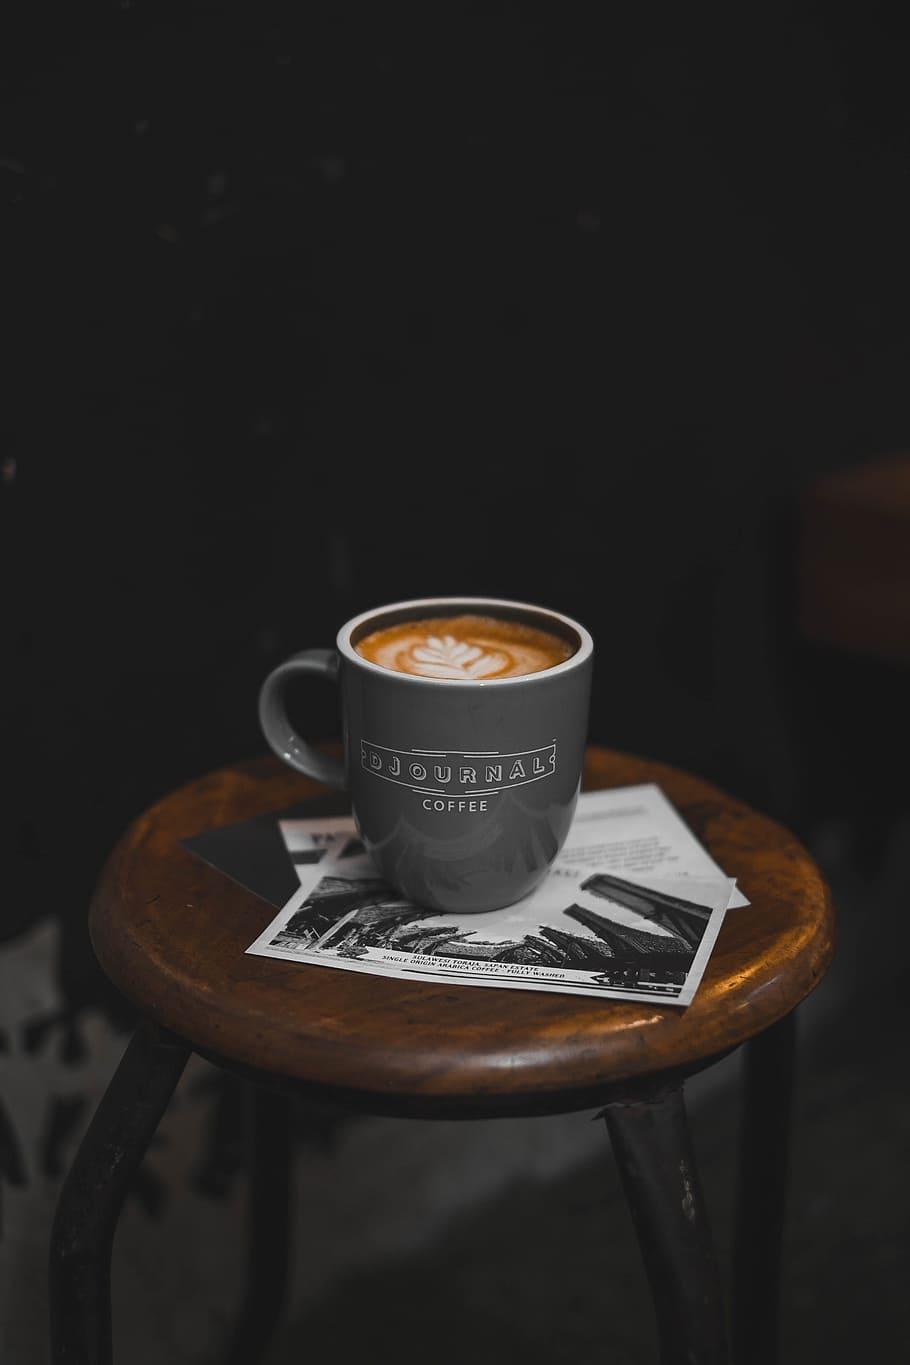 HD wallpaper: black coffee mug filed with espresso coffee